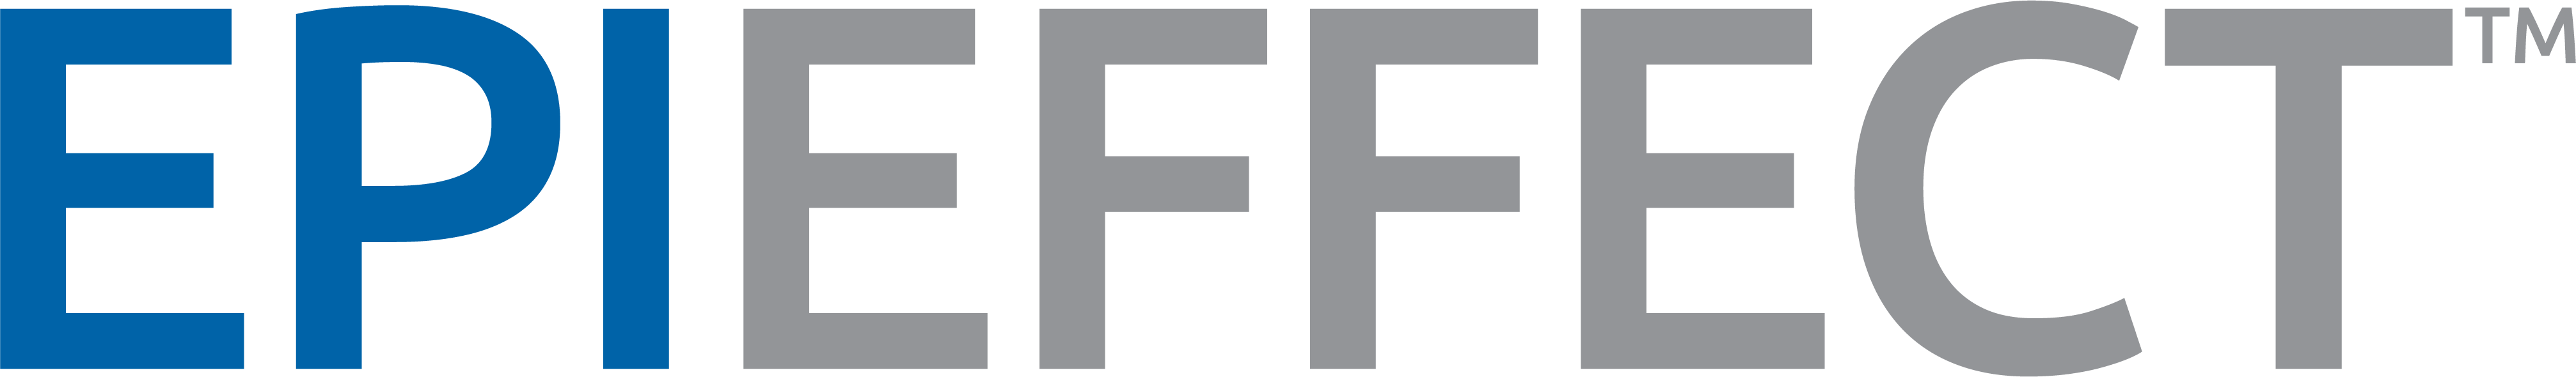 epieffect logo